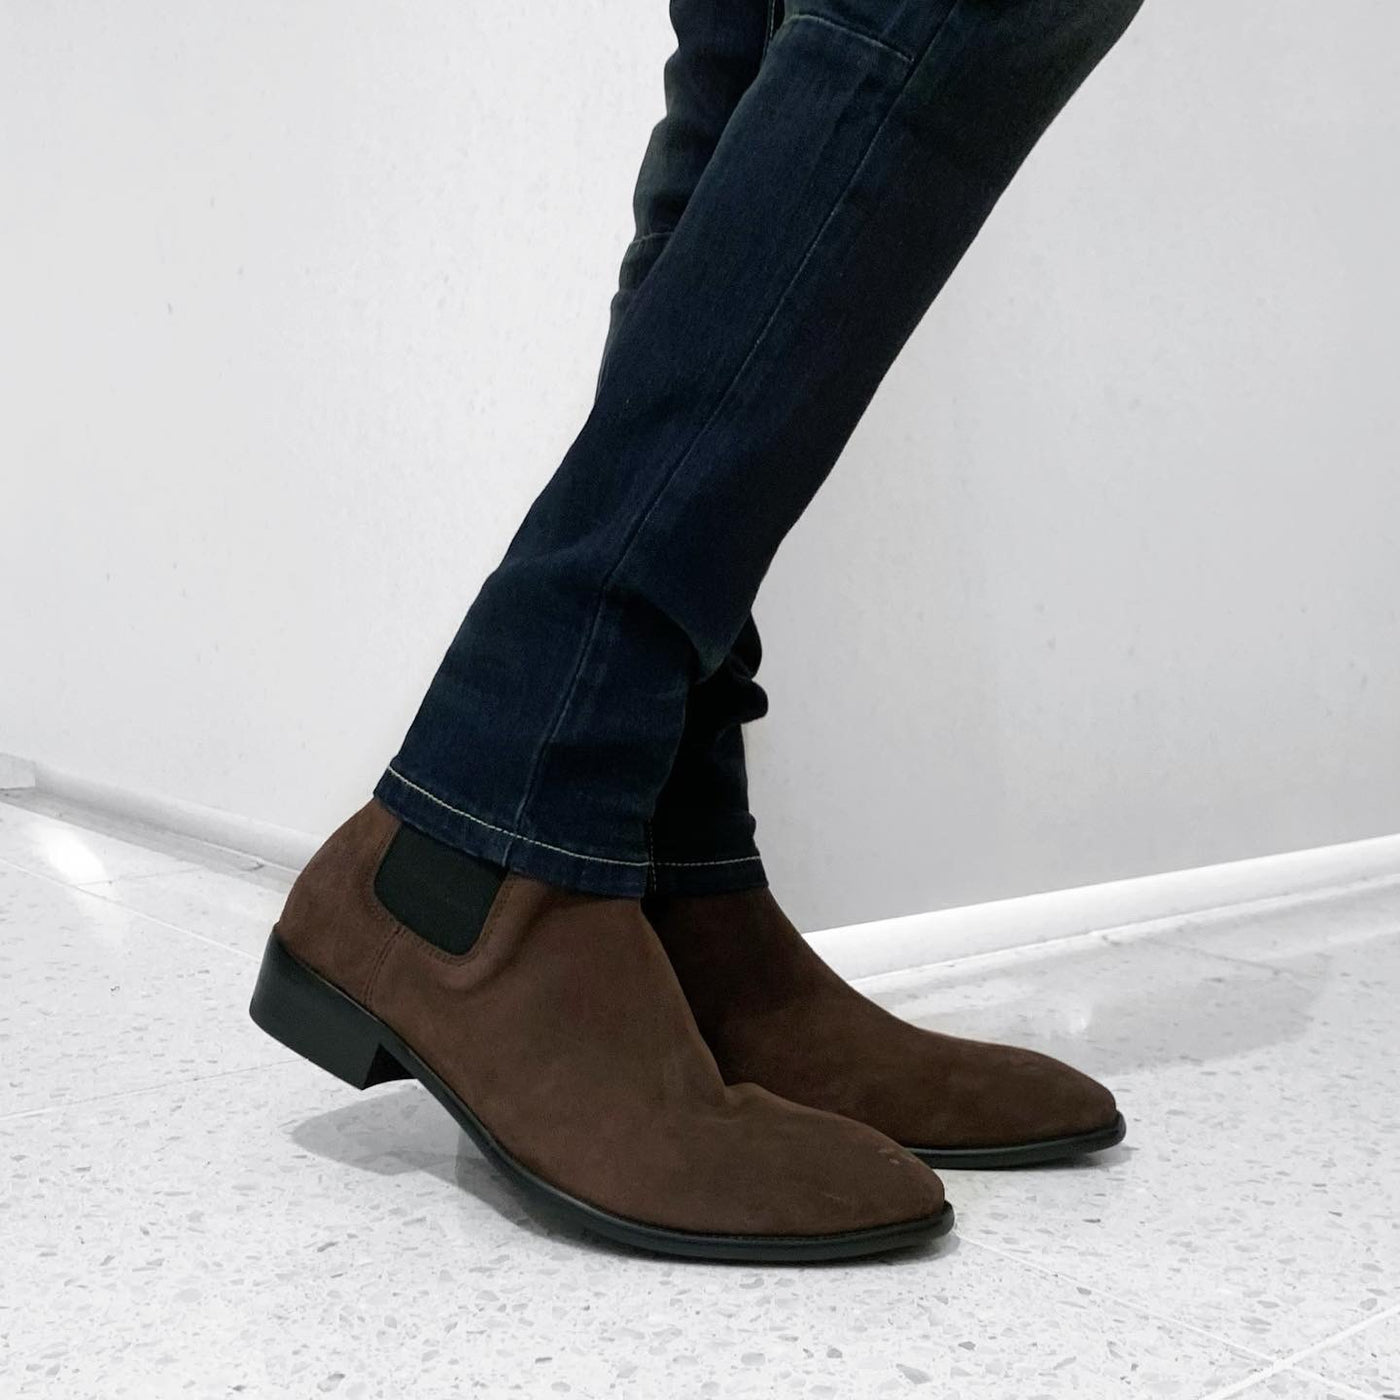 PANERO"Suede side gore boots"Suede side gore boots (dark brown)